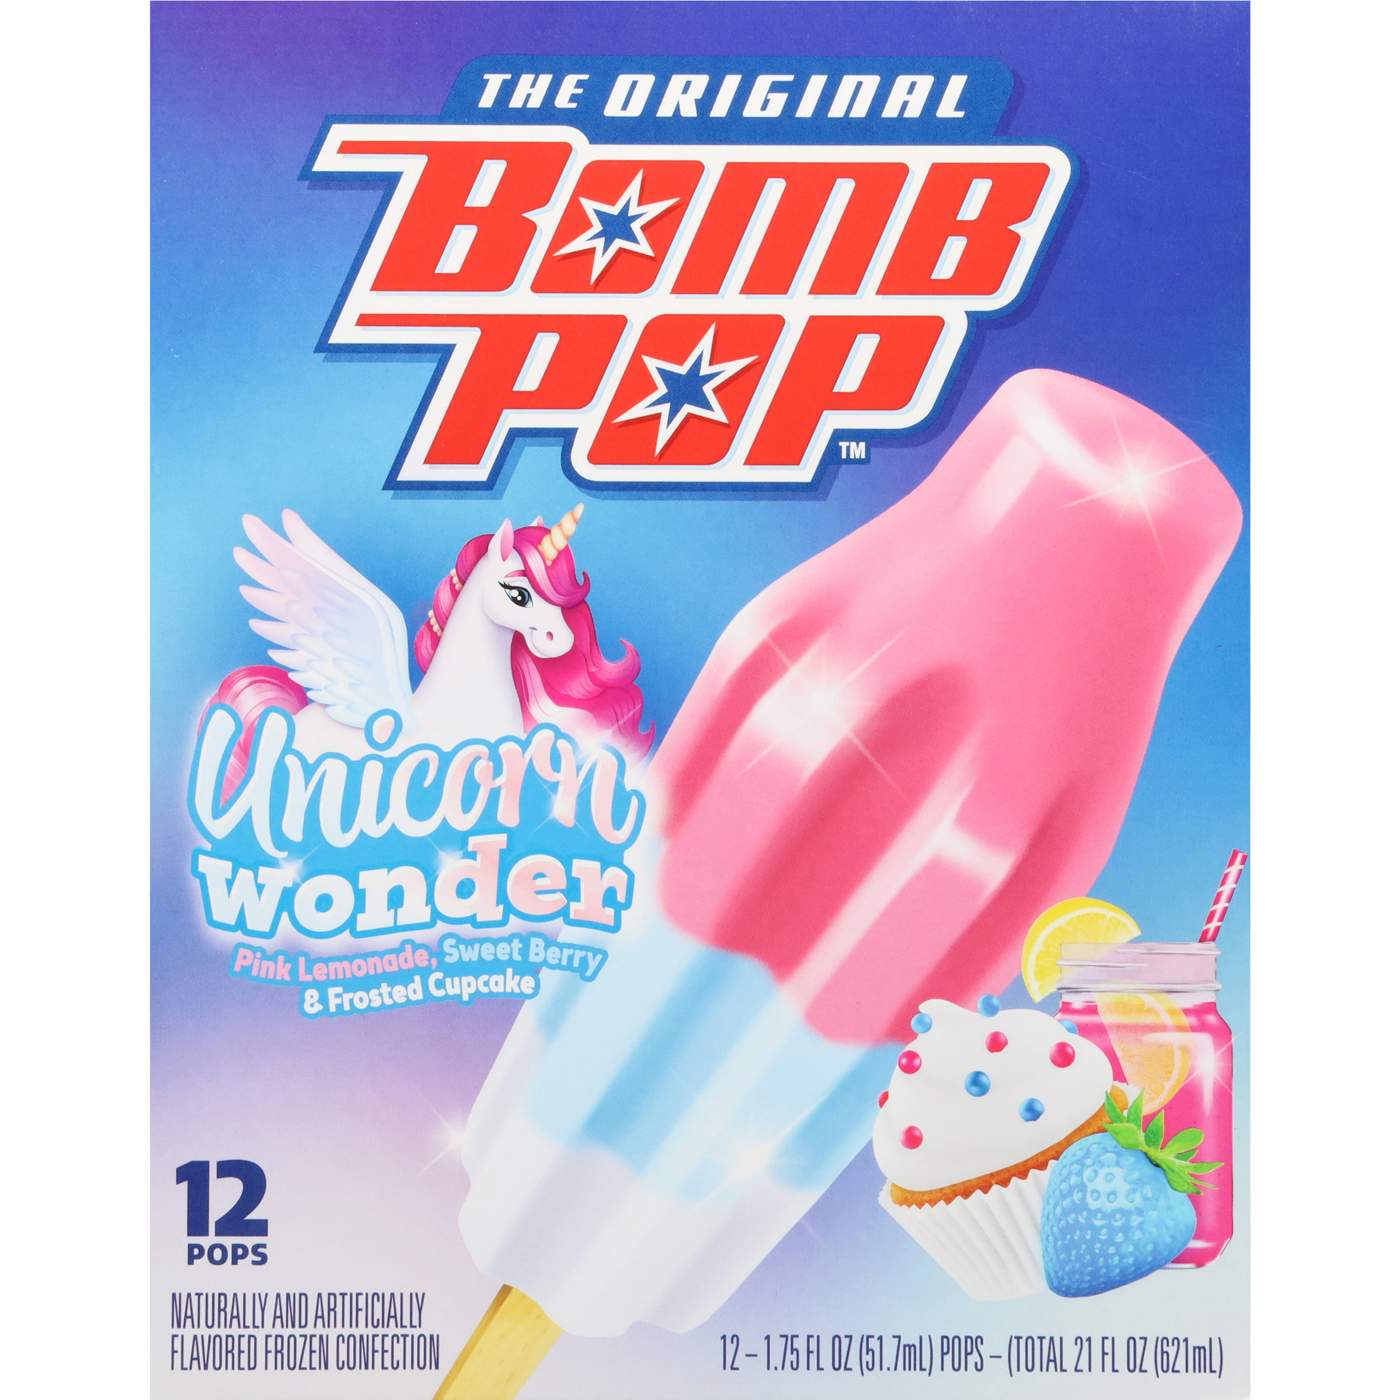 Bomb Pop Unicorn Wonder Ice Pops; image 1 of 2